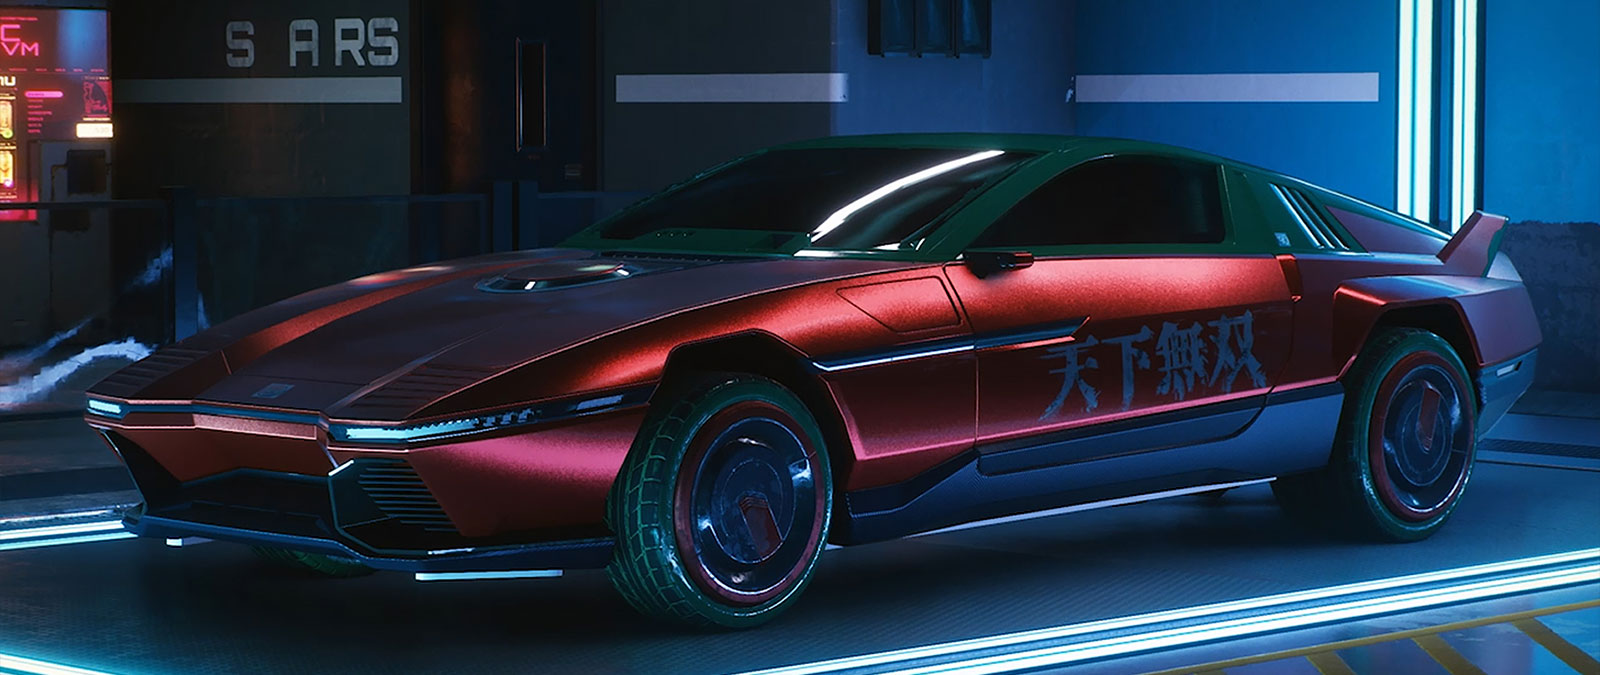 A sleek futuristic car